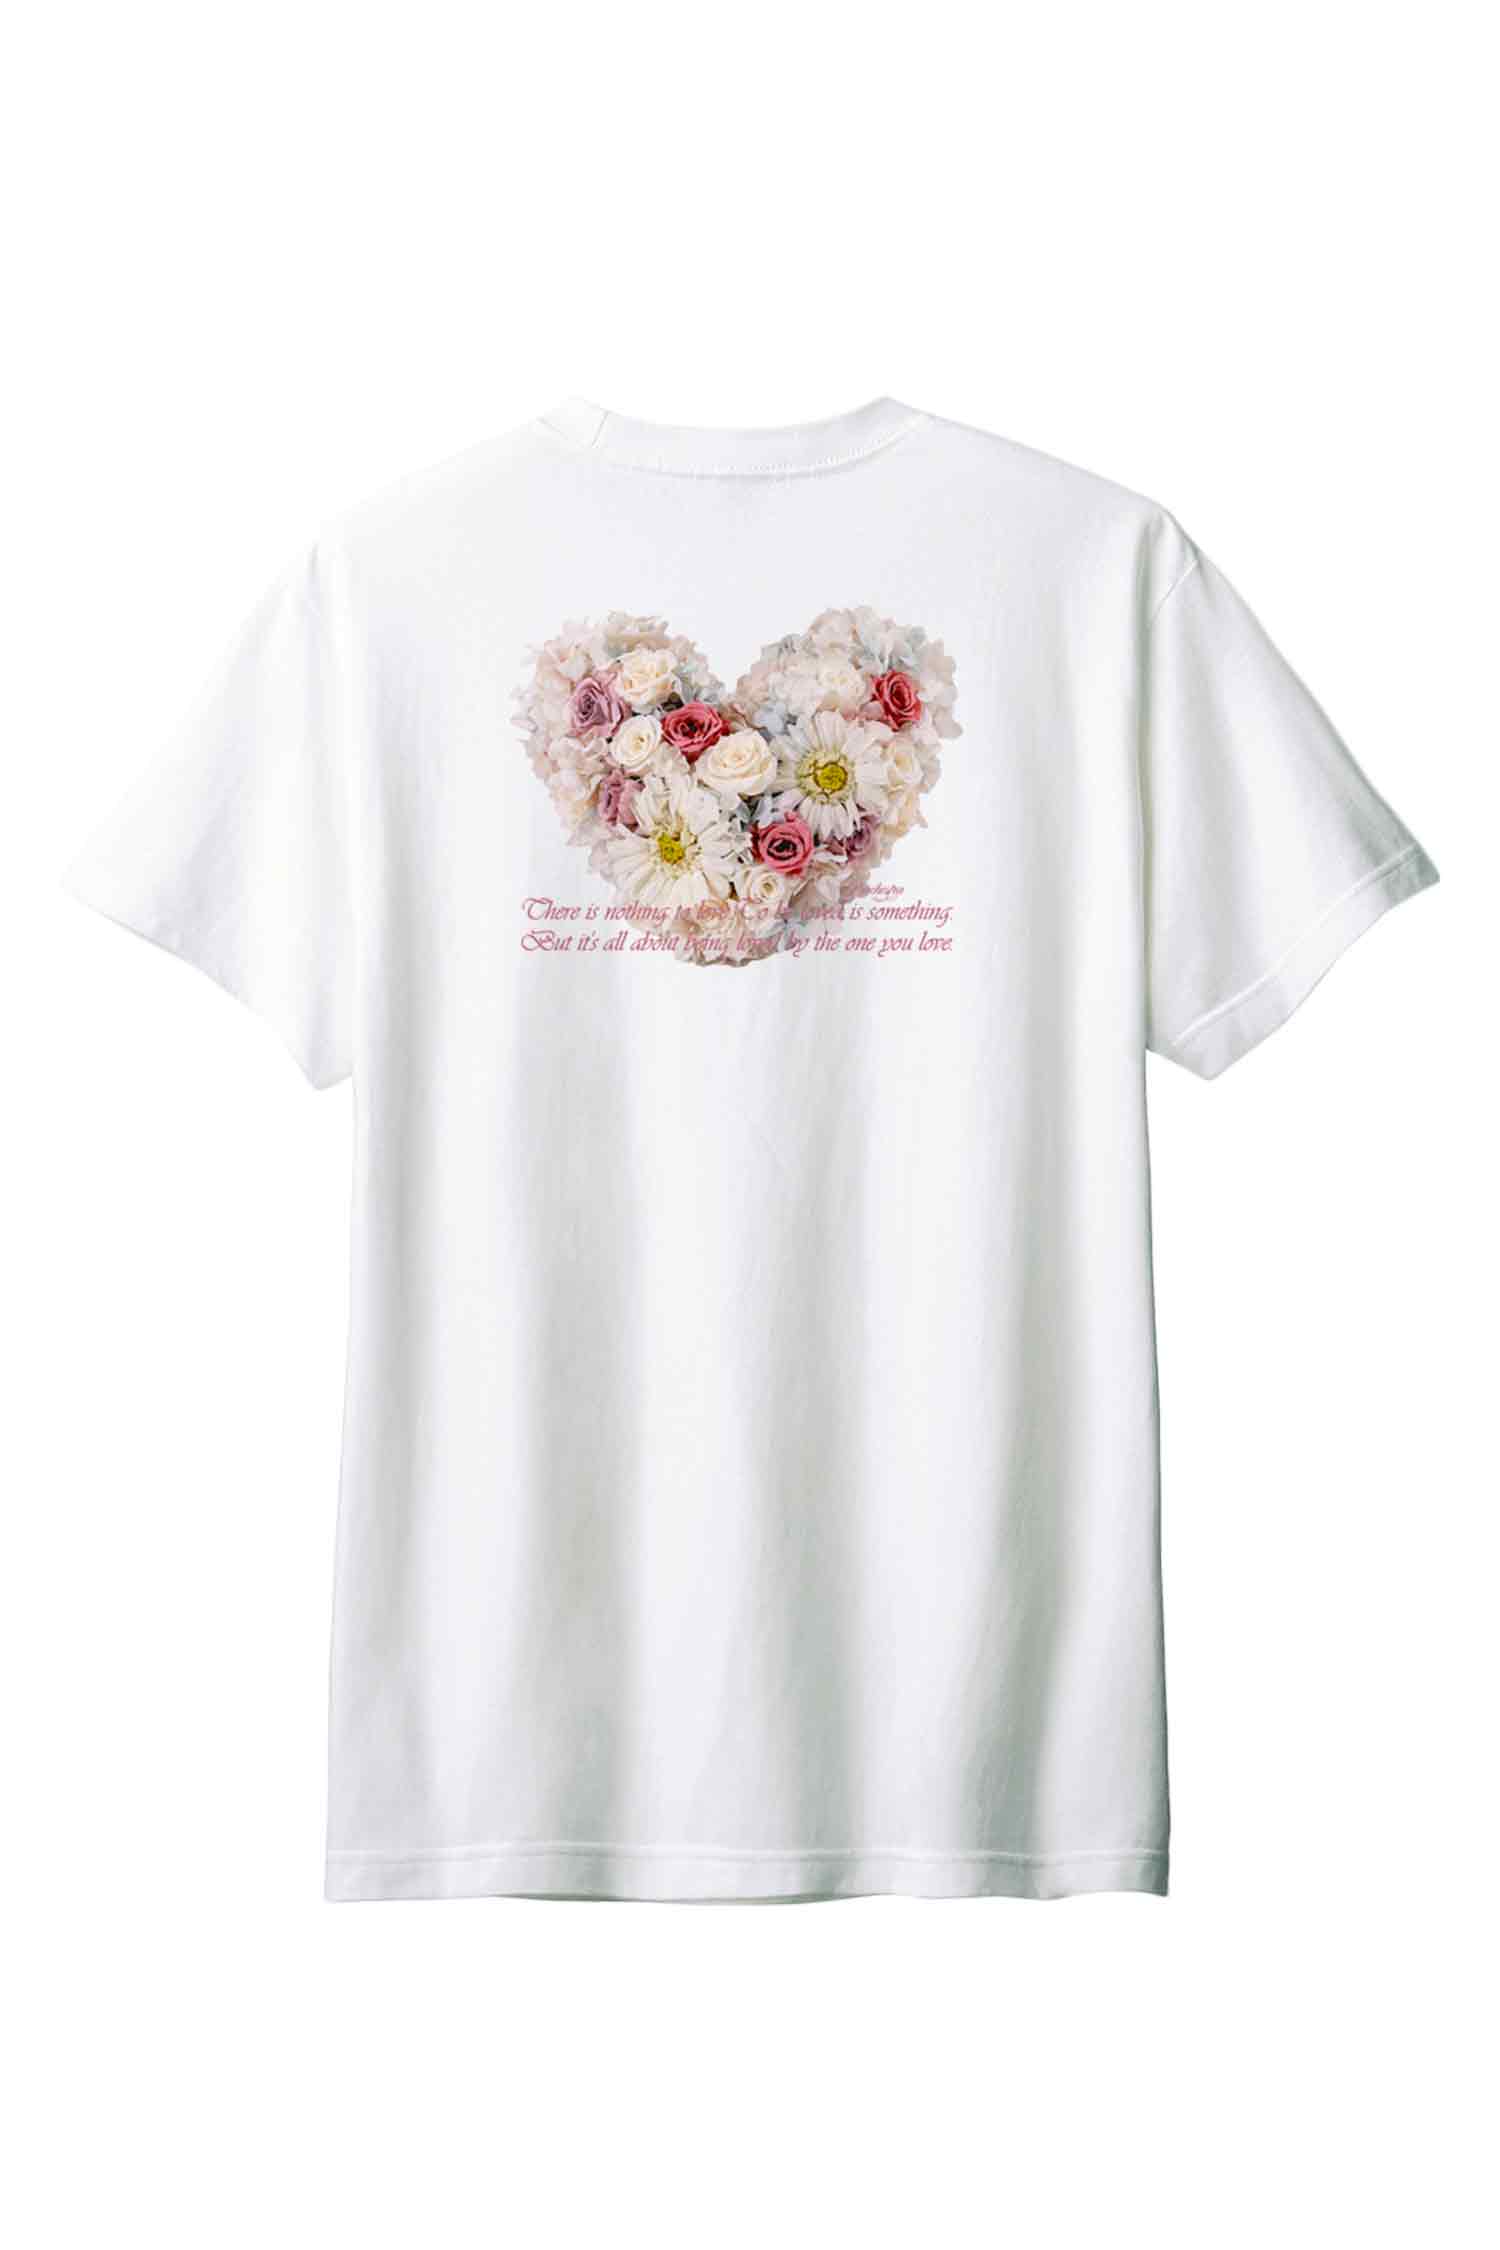 【PORCHESTRA】ロマンチックな一枚！/フラワーハートフォト風バックプリントTシャツ - Floral Heart Photo Style  Back Print Tee /cotton 100%/size:XS-XXL